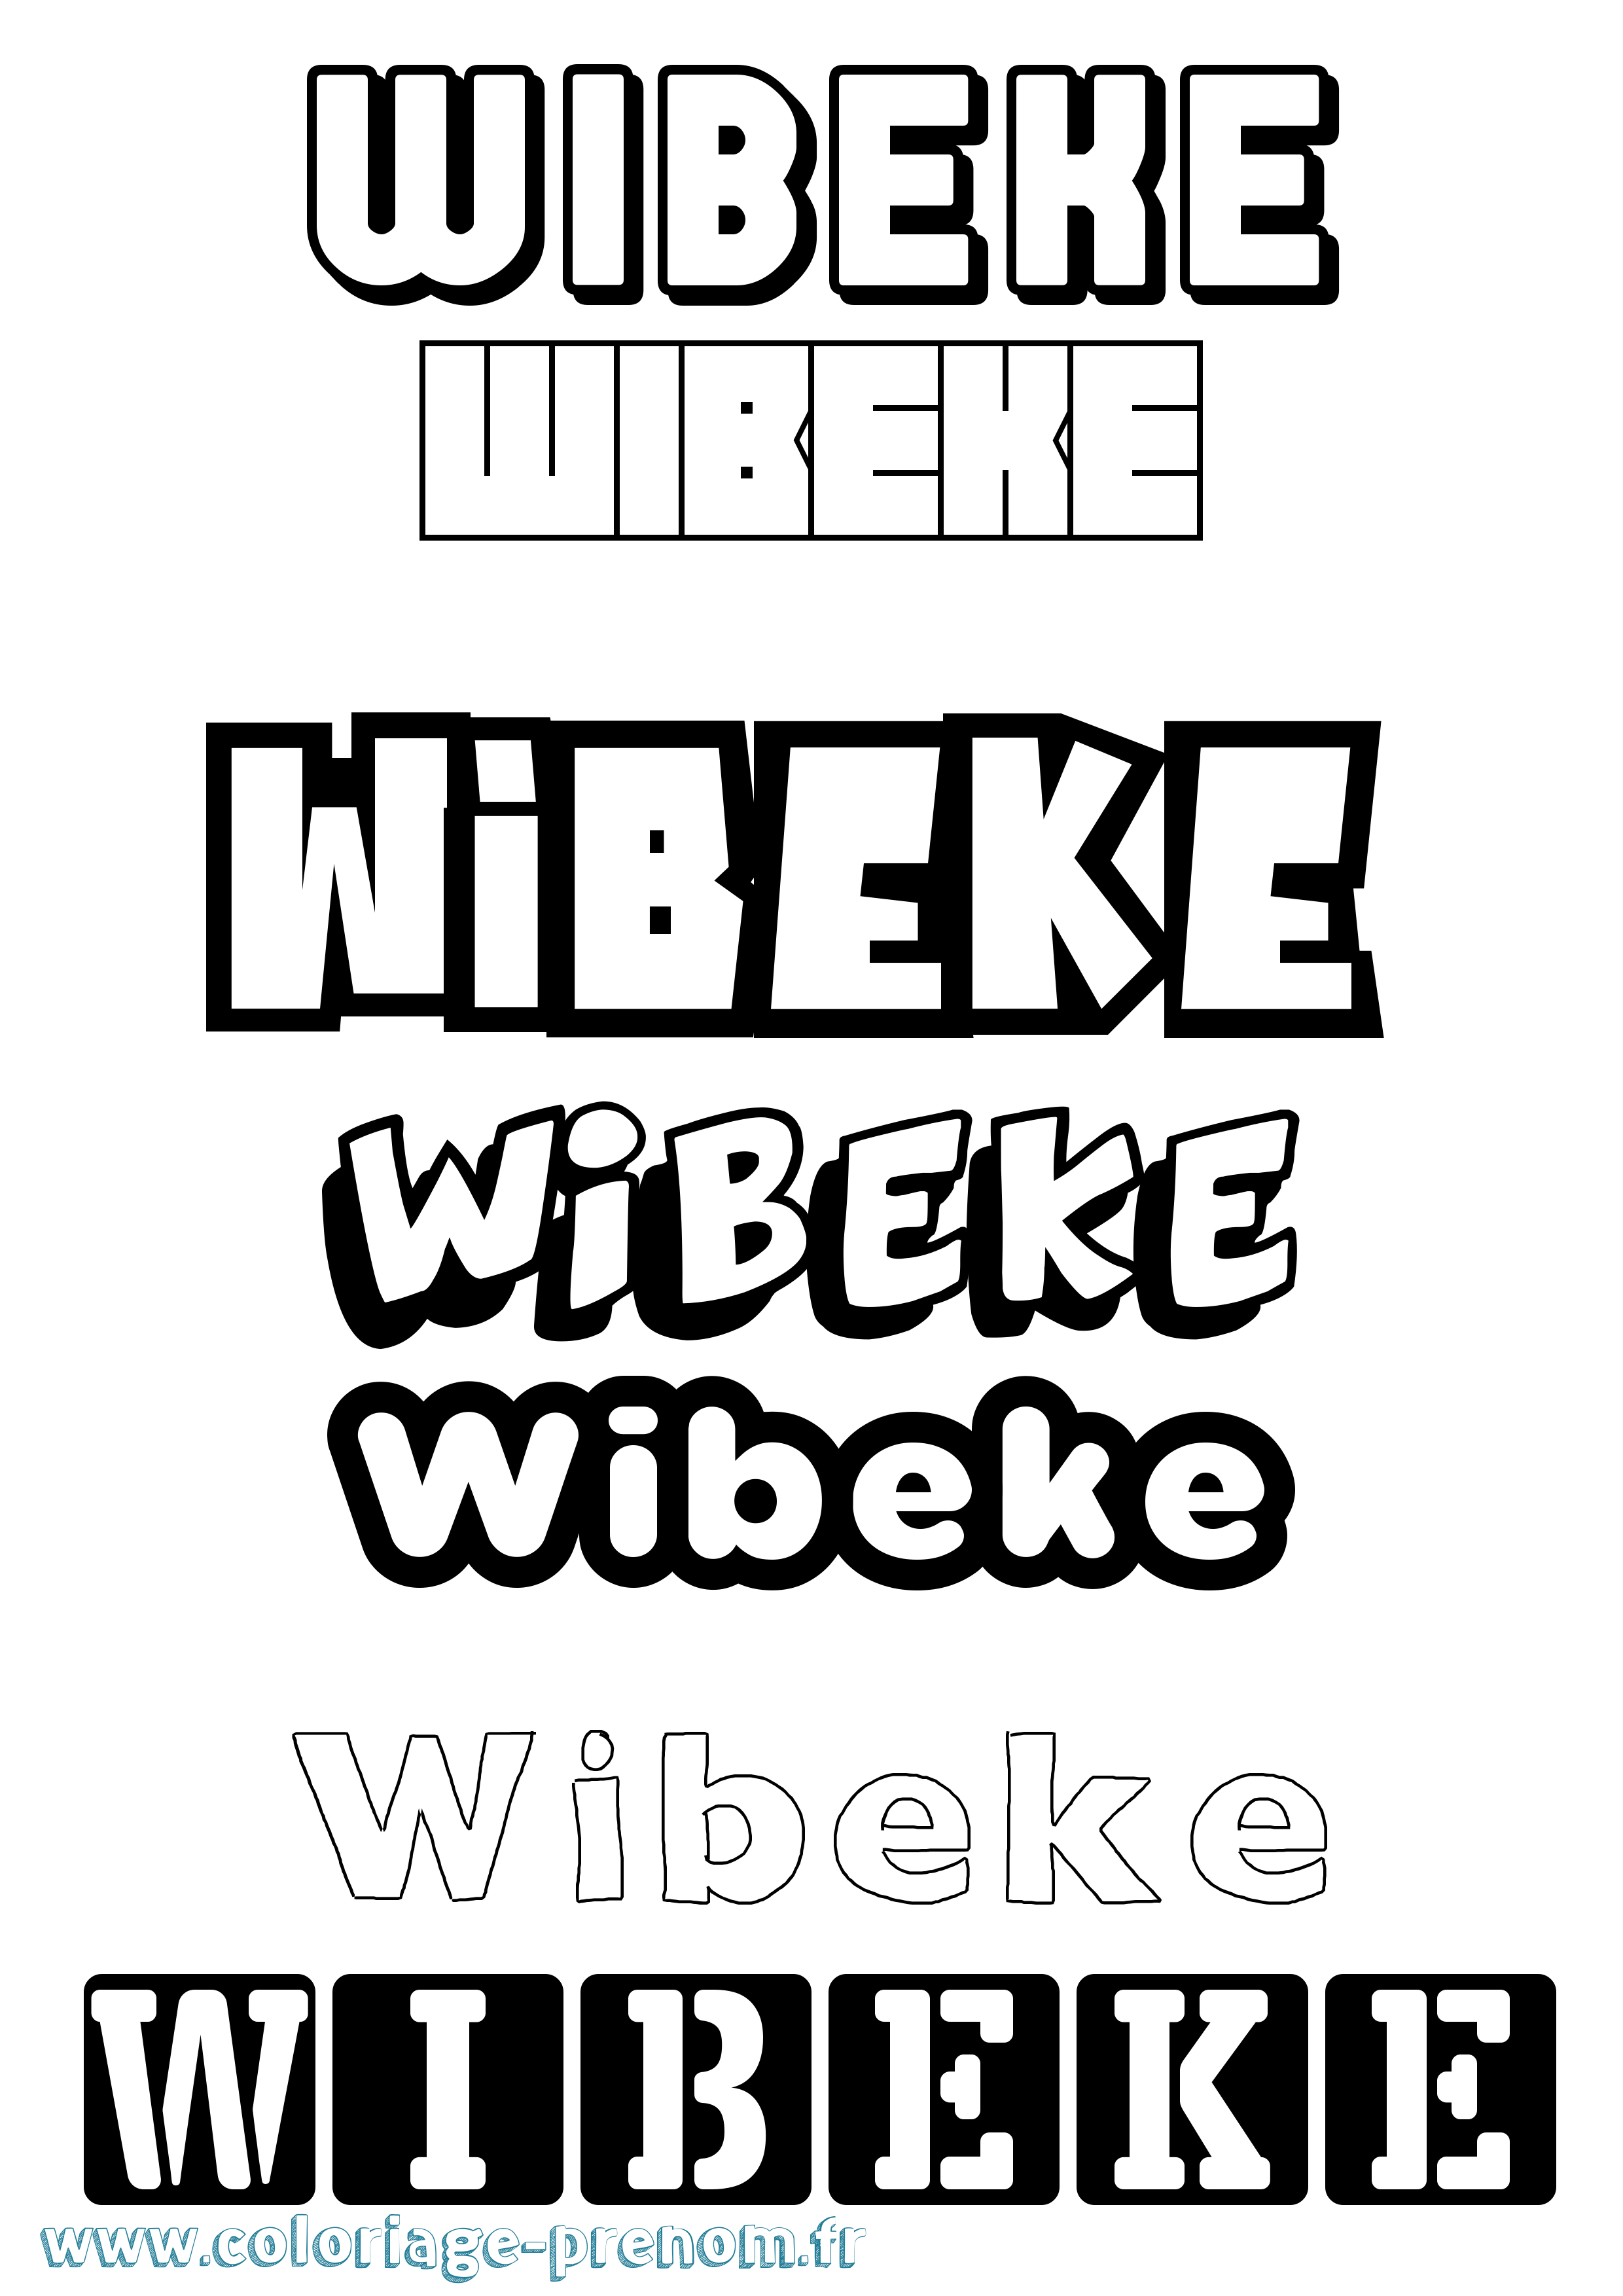 Coloriage prénom Wibeke Simple